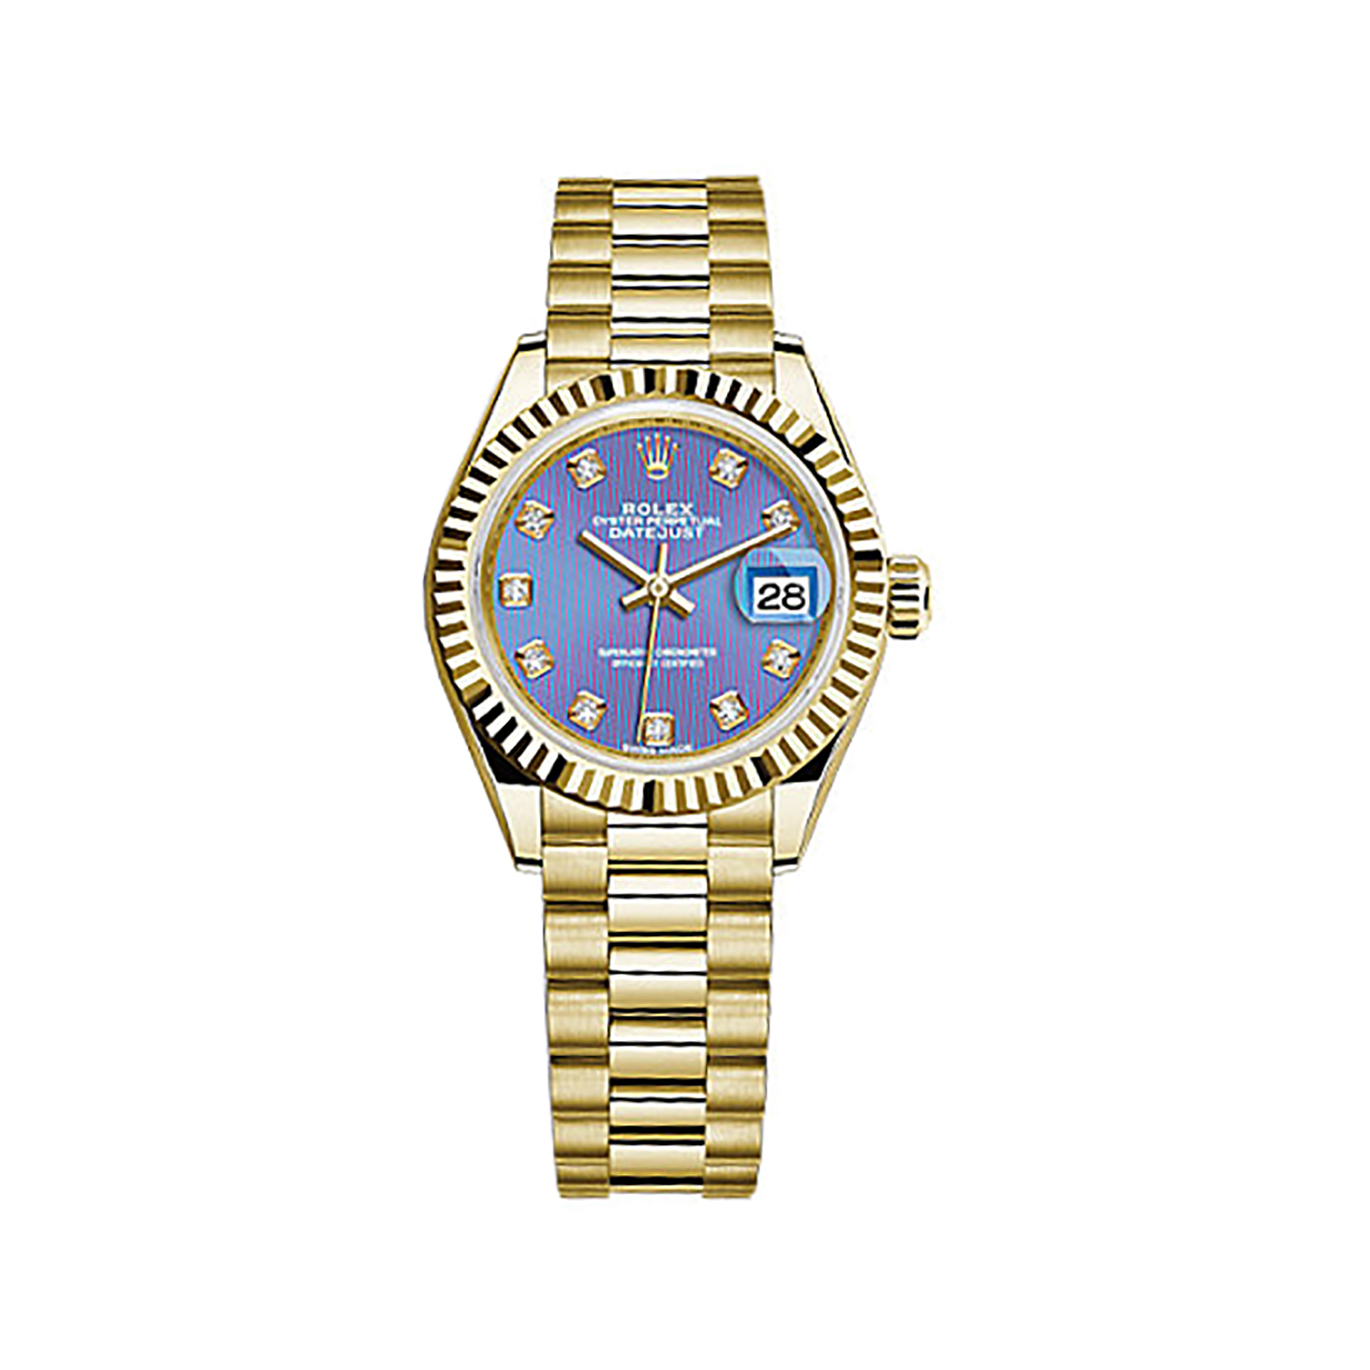 Lady-Datejust 28 279178 Gold Watch (Lavender Set with Diamonds)